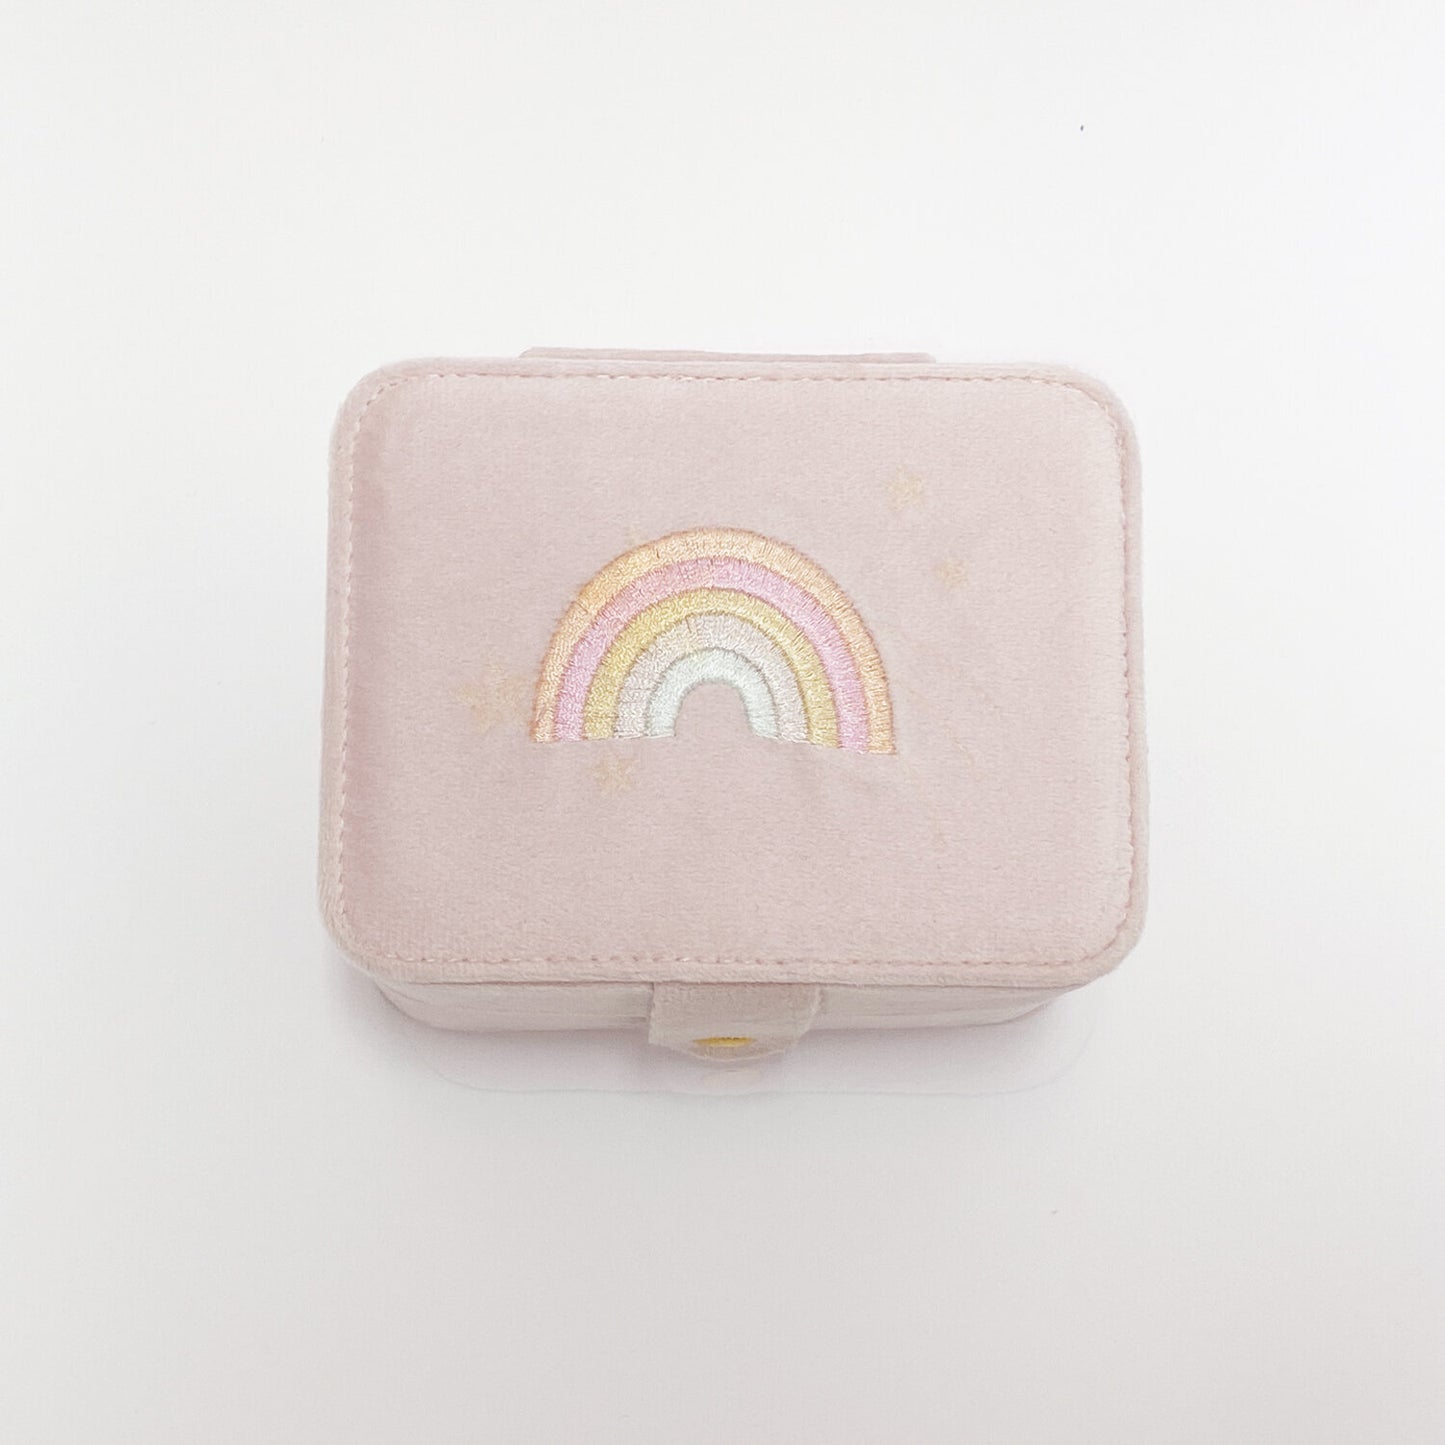 ROCKAHULA - rainbow jewellery box pink, rainbow